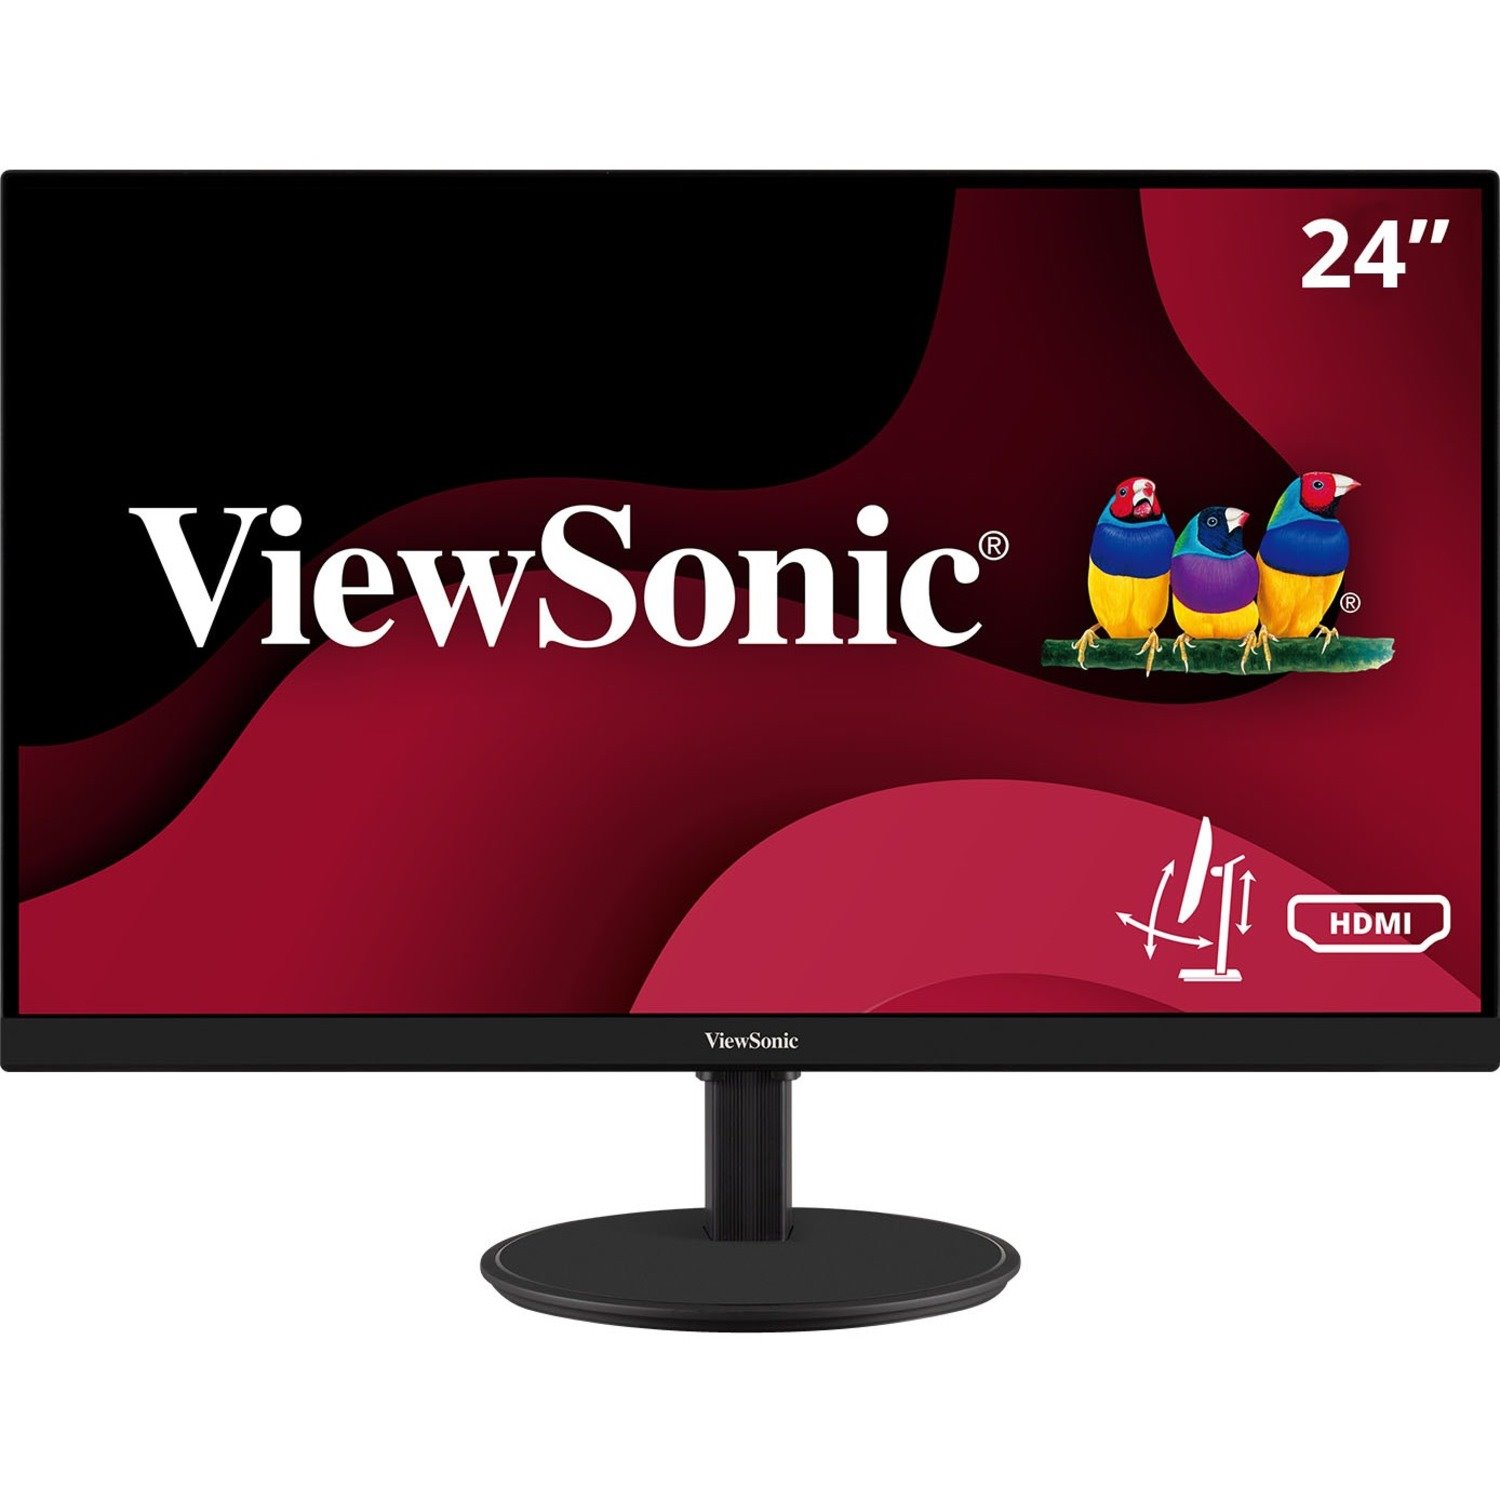 ViewSonic VA2447-MHJ 24 Inch Full HD 1080p Monitor with Advanced Ergonomics, Ultra-Thin Bezel, AMD FreeSync, 100Hz, Eye Care, and HDMI, VGA Inputs for Home and Office